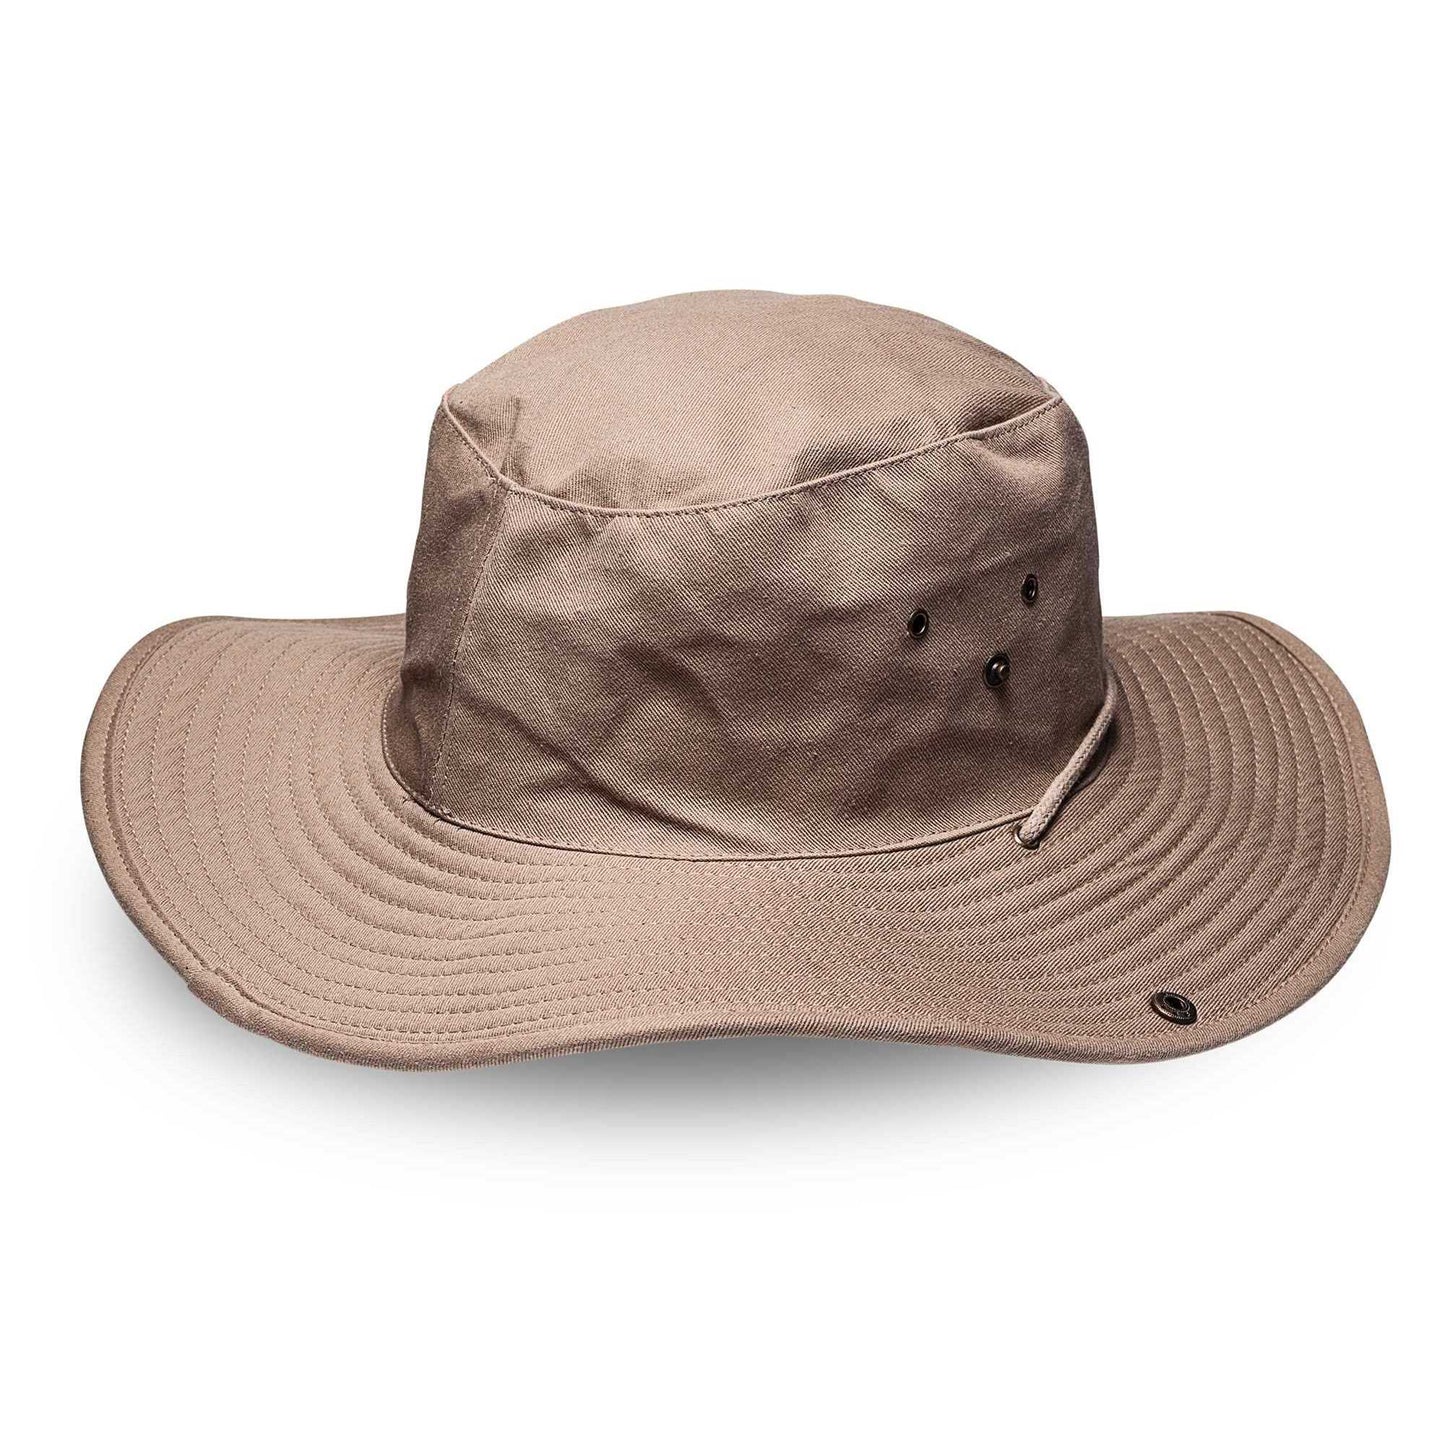 K6048 Kiddies Wide Brim Safari Hat